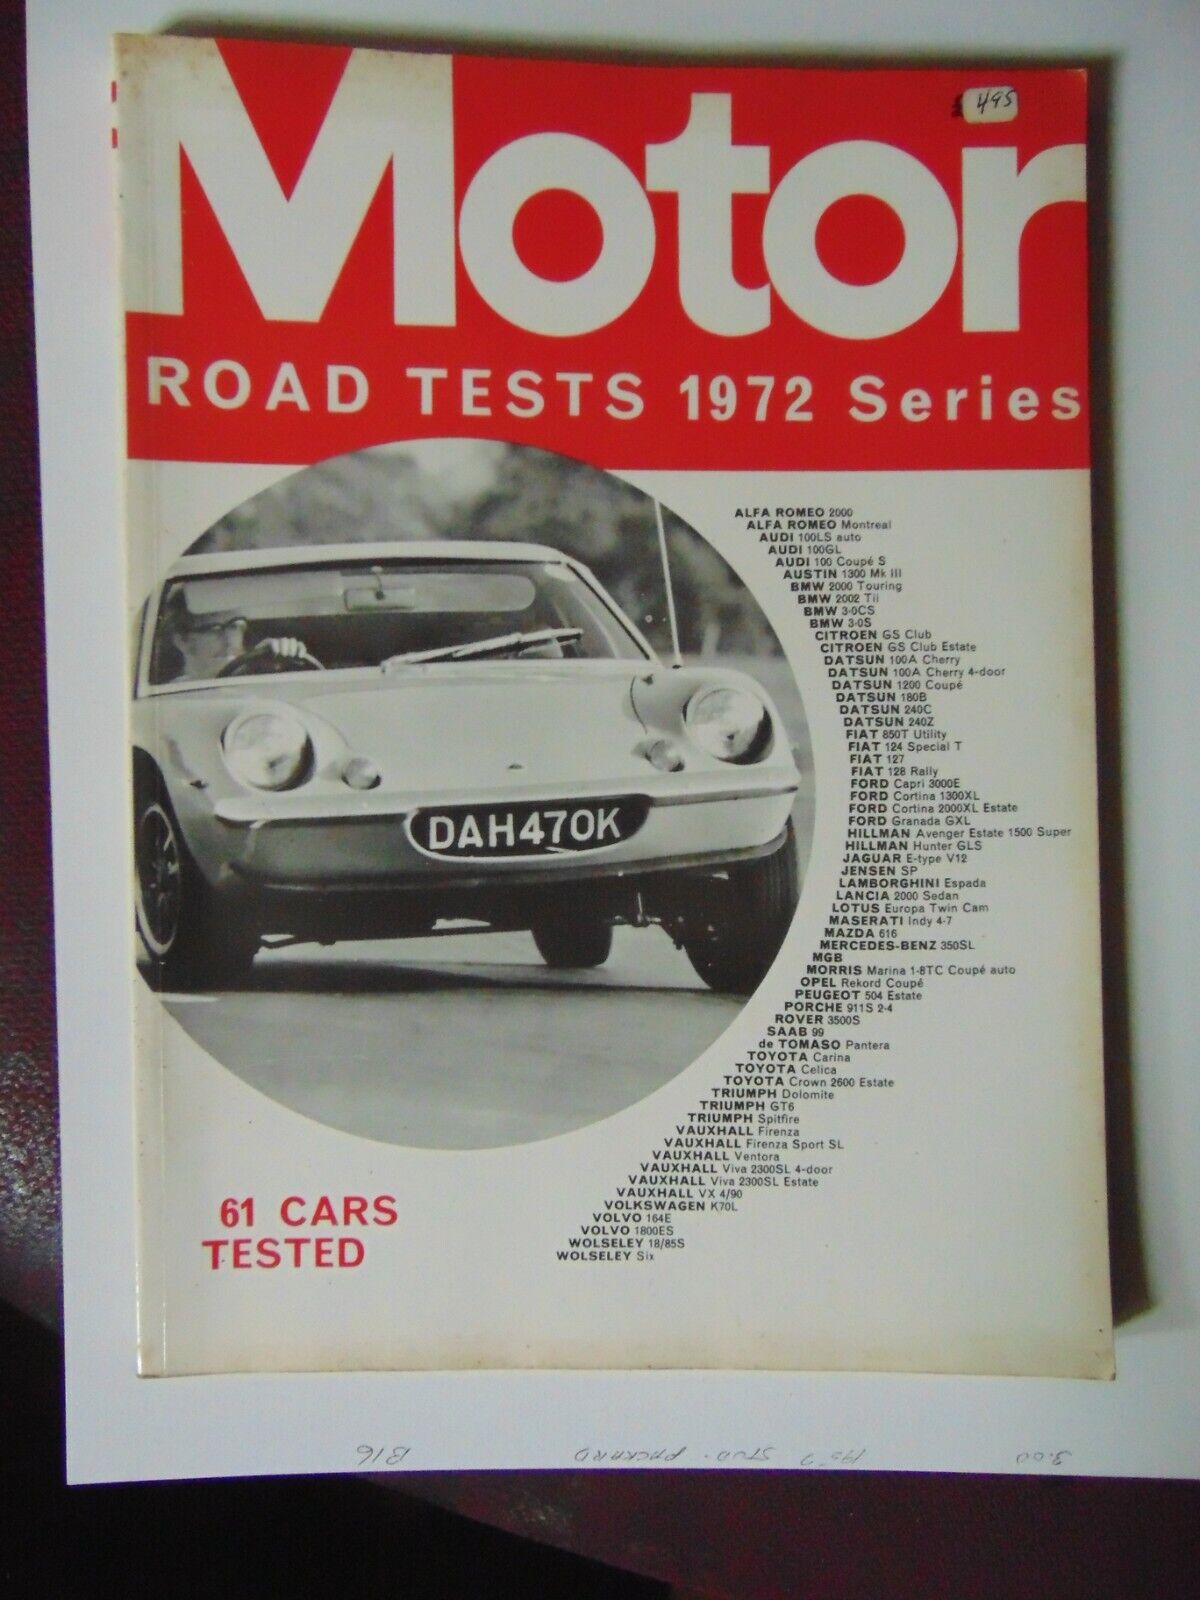 MOTOR ROAD TESTS 1972 SERIES Book/Magazine